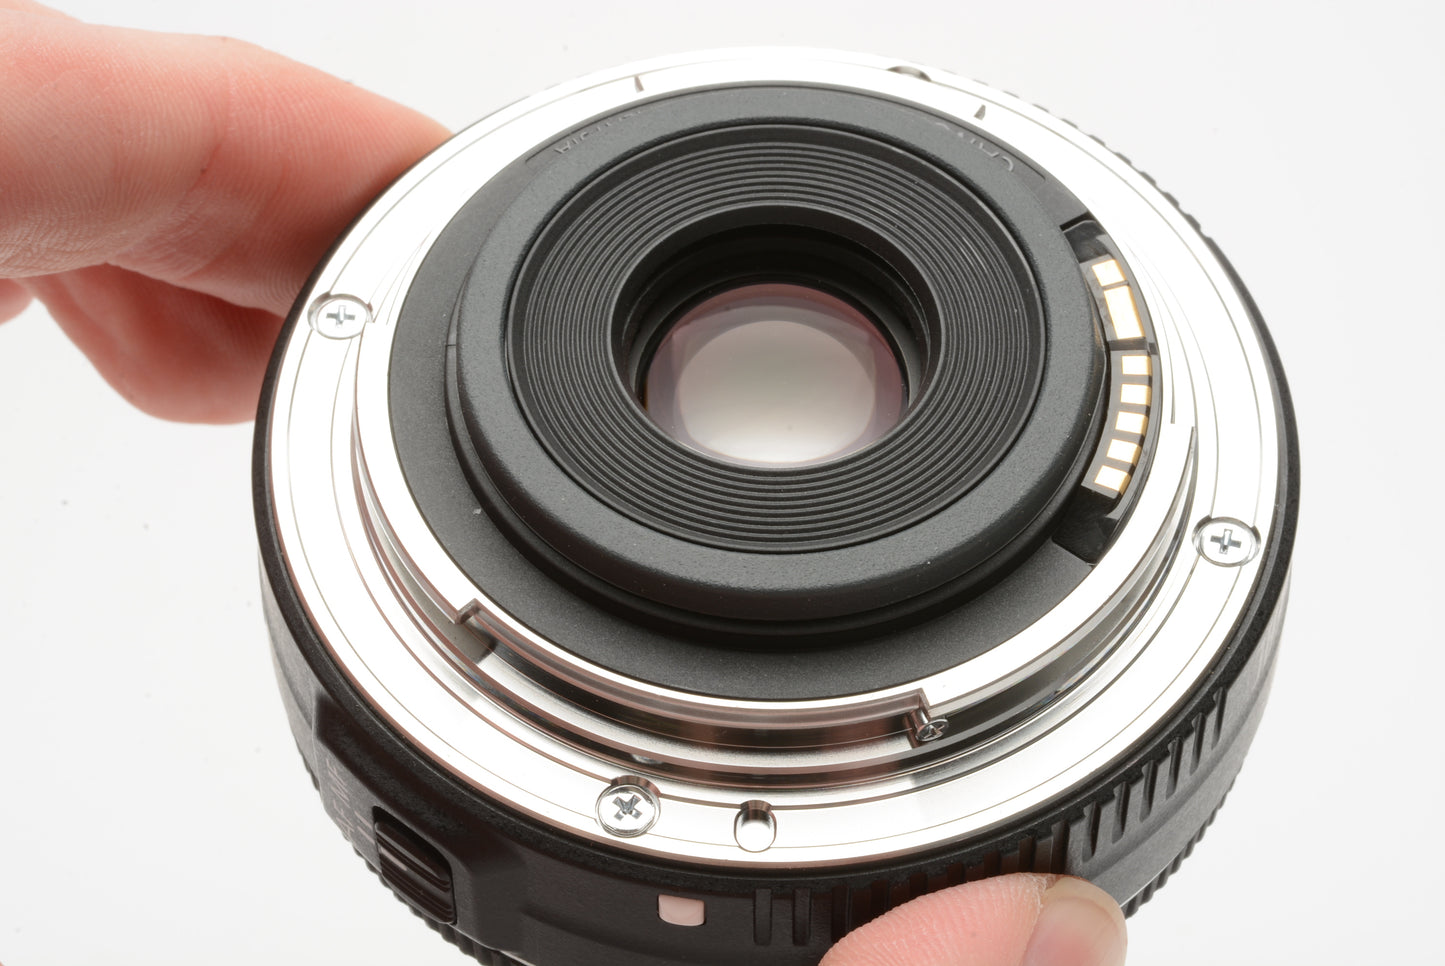 Canon EFS 24mm F2.8 STM Pancake macro lens, w/Caps